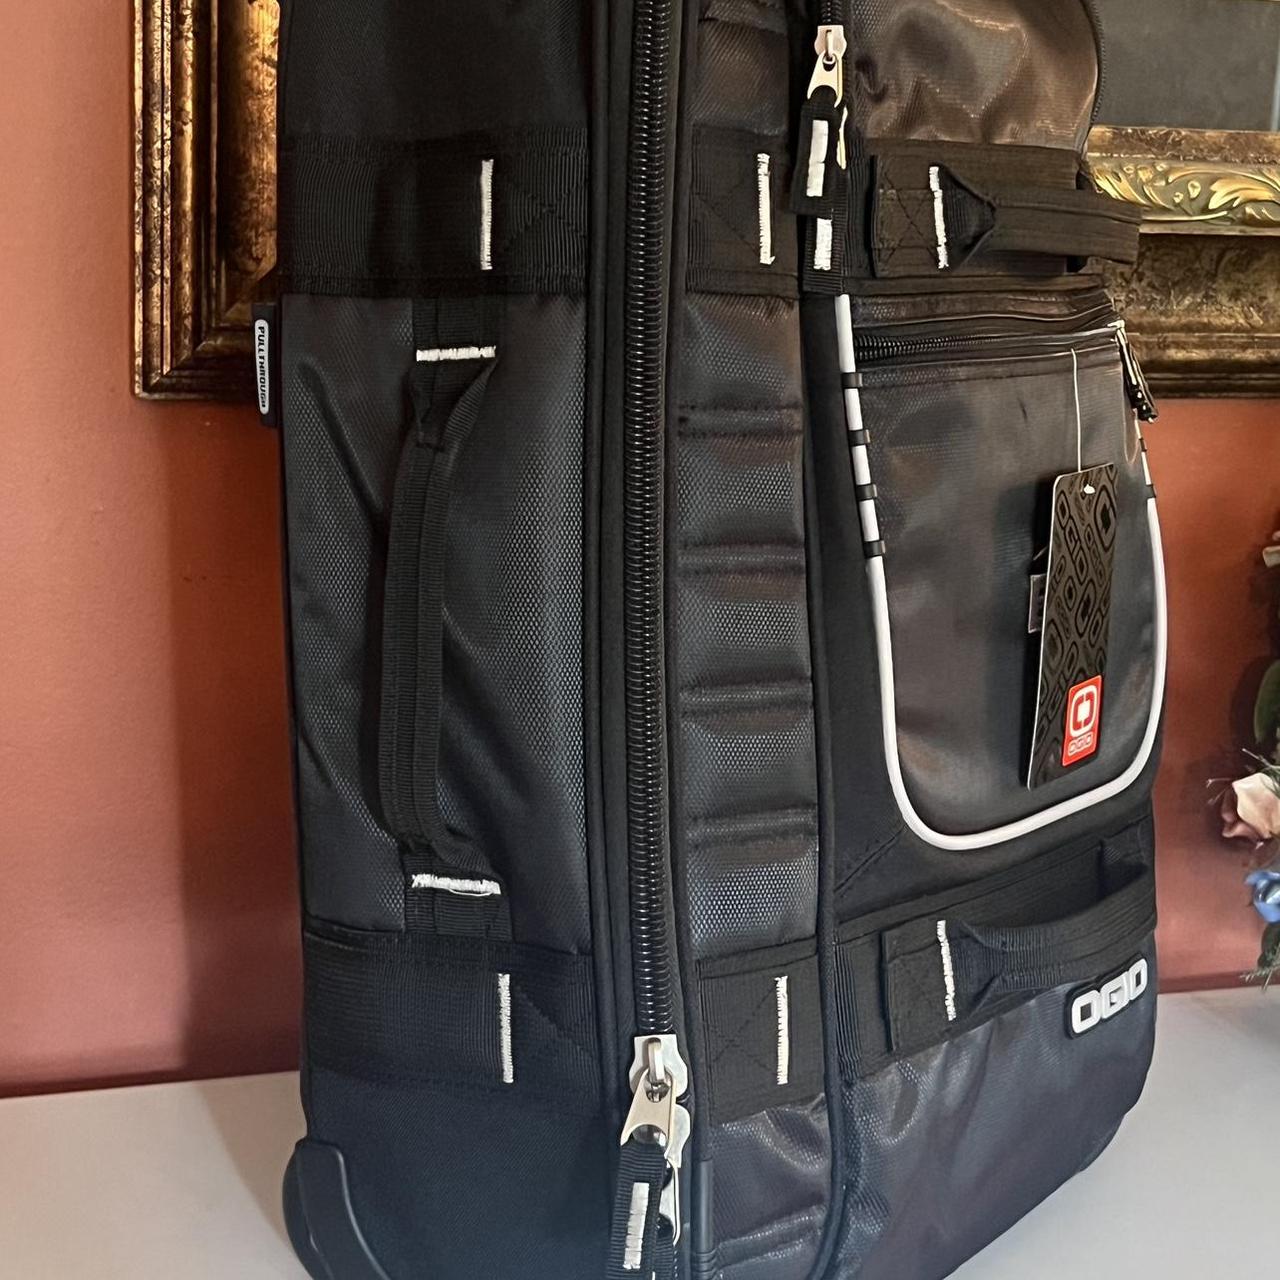 OGIO Pull-Through Travel Bag - Dark/All